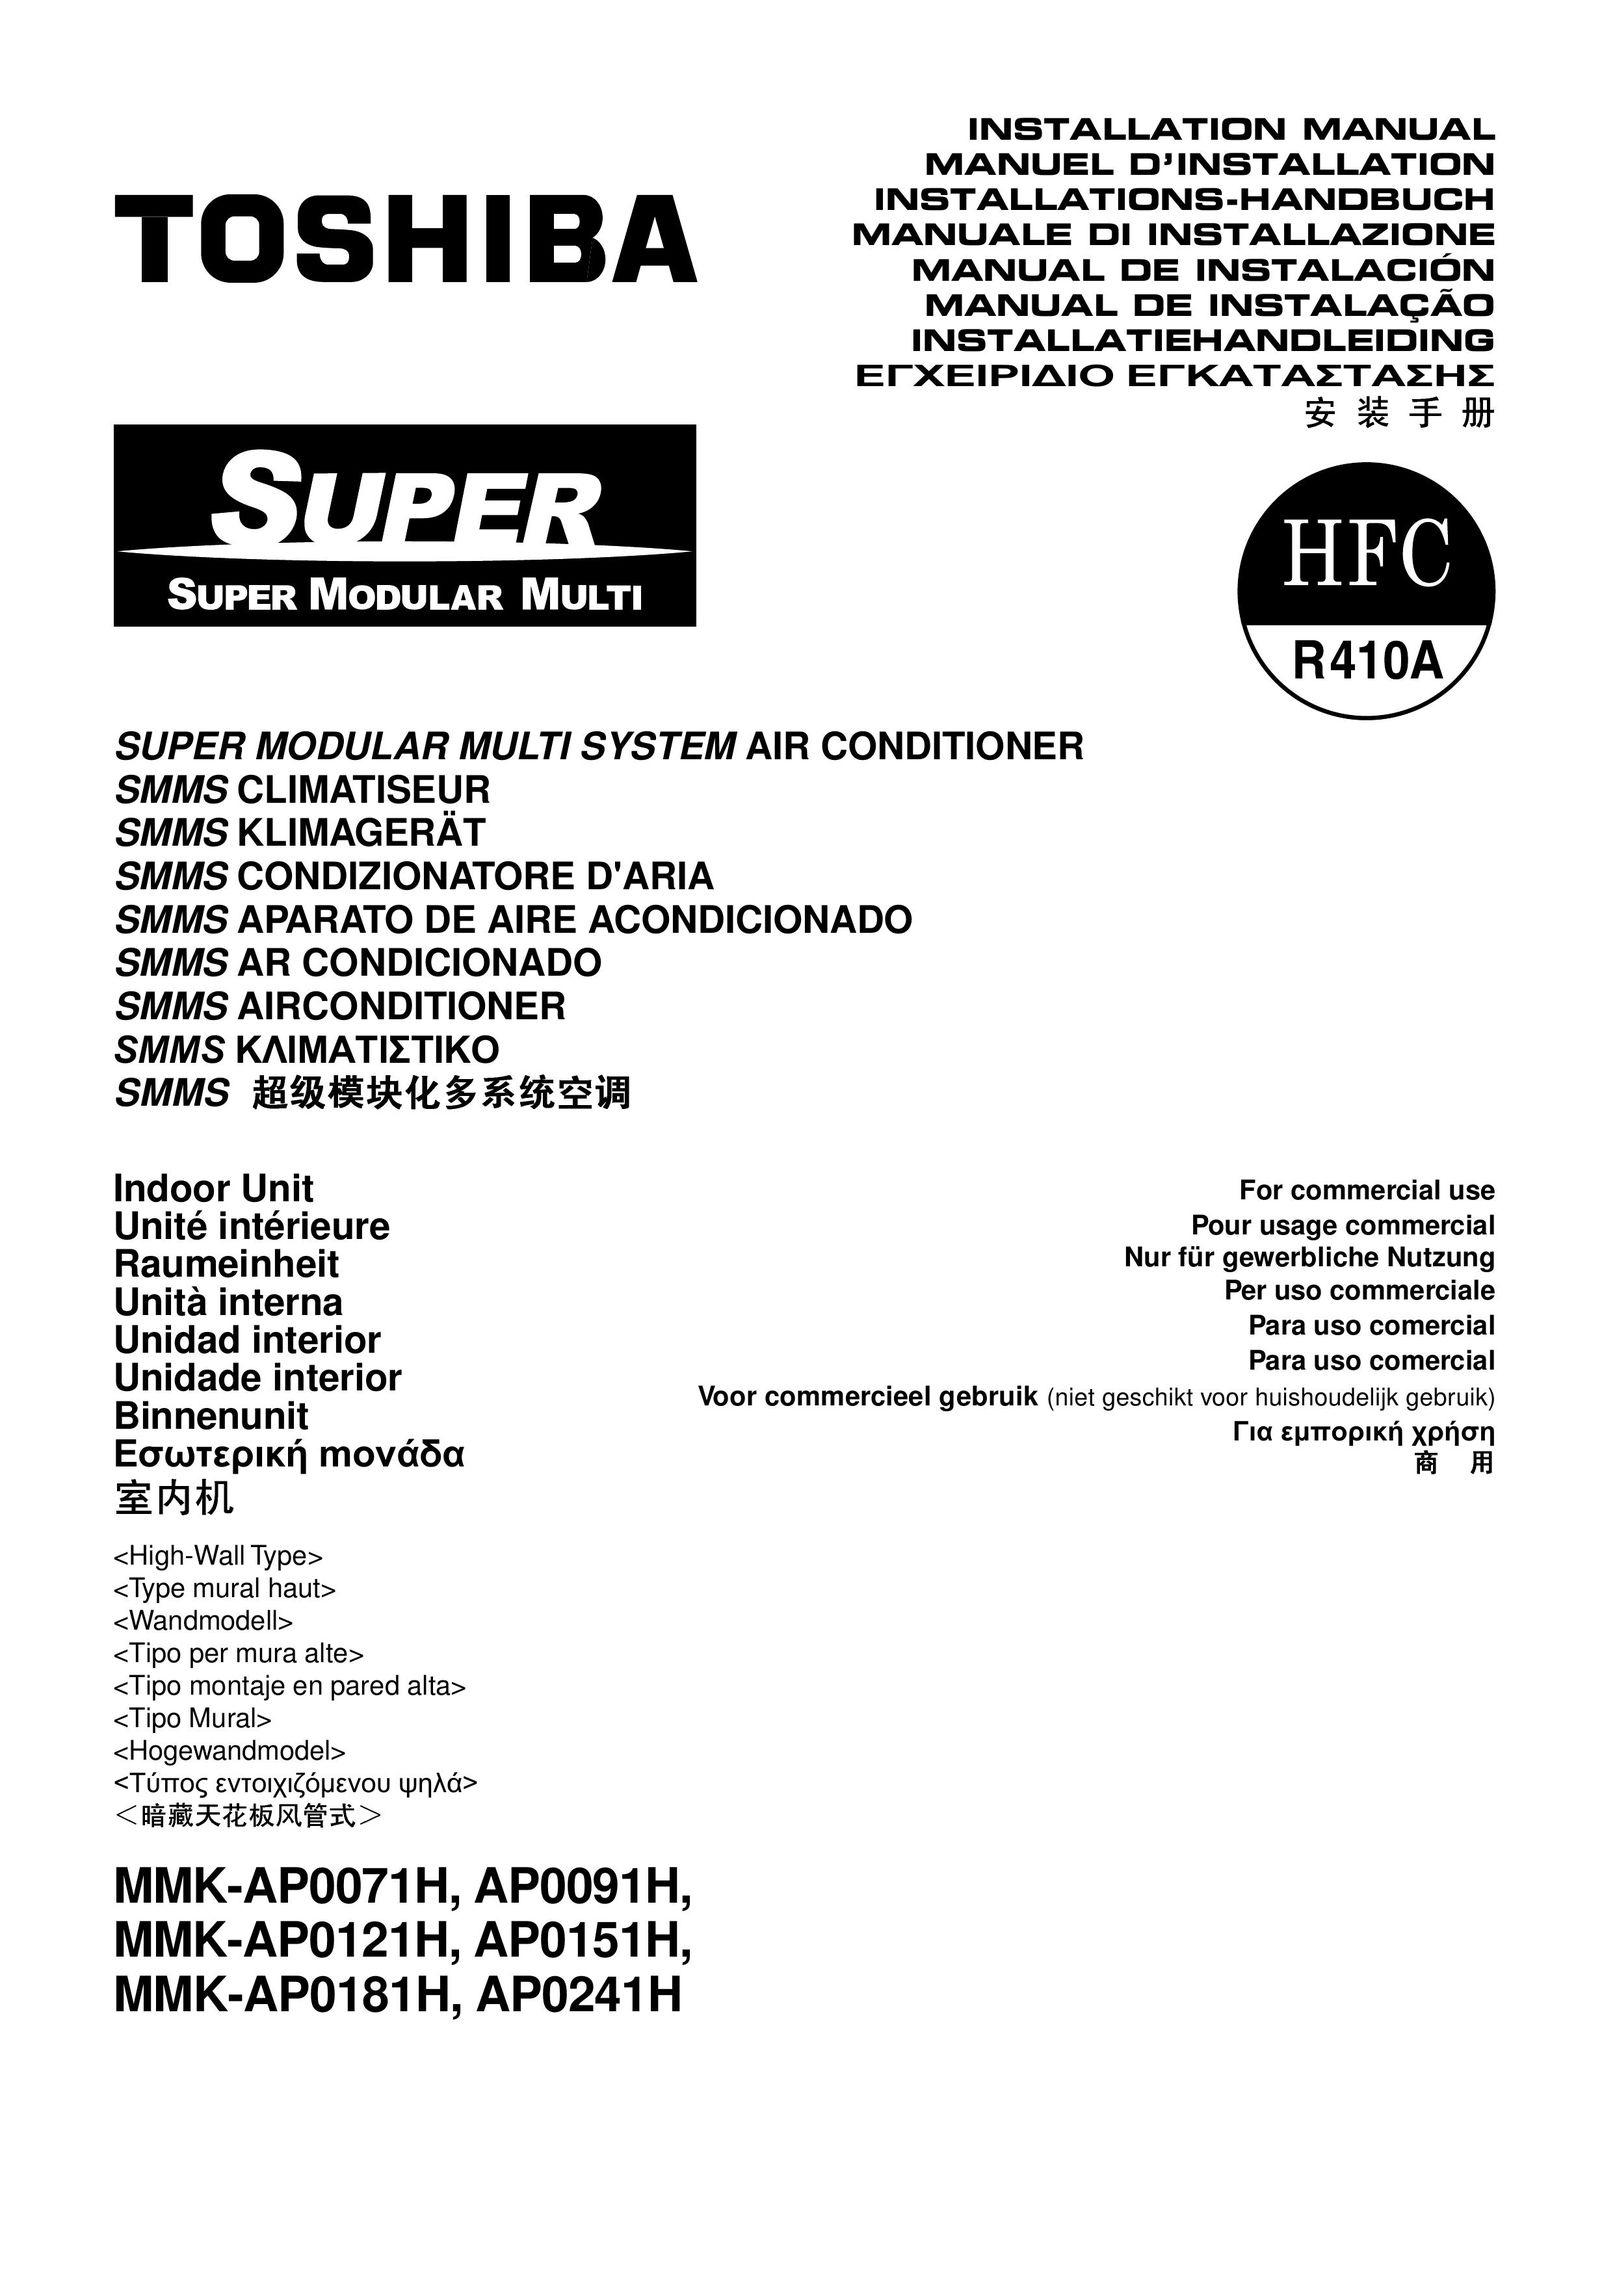 Pentax MMK-AP0181H Air Conditioner User Manual